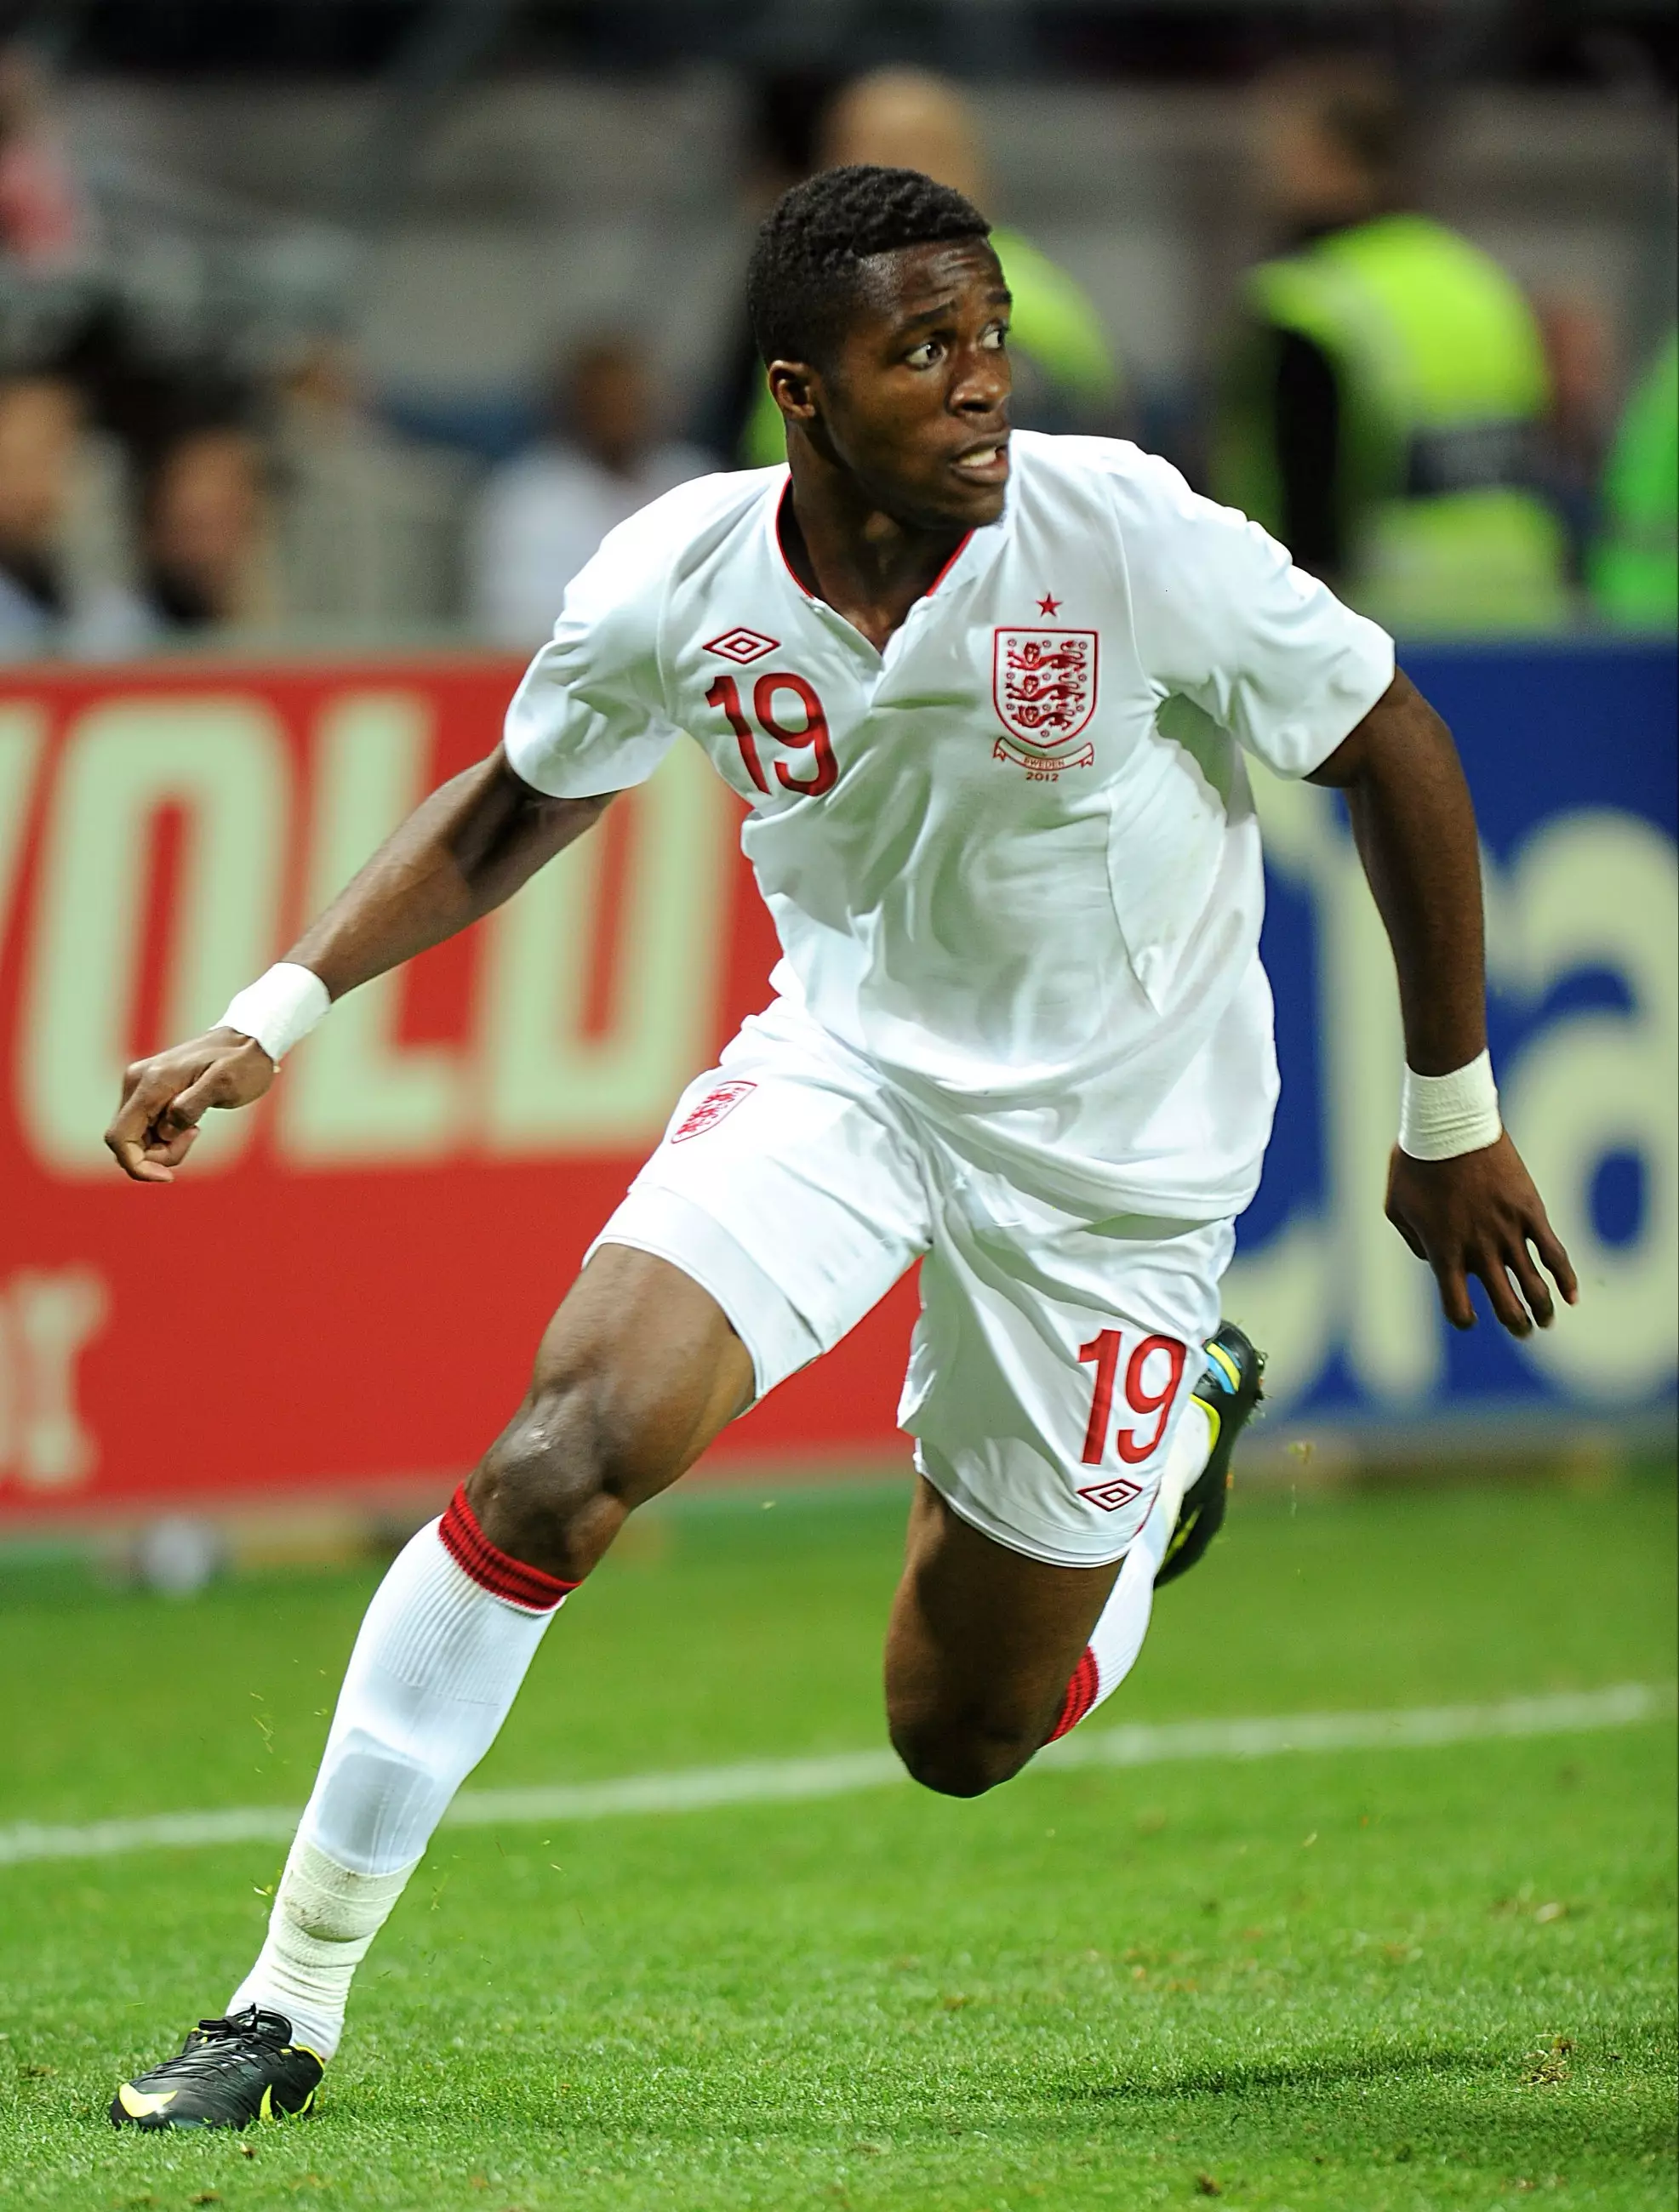 Zaha now plays international football for Ivory Coast. Image: PA